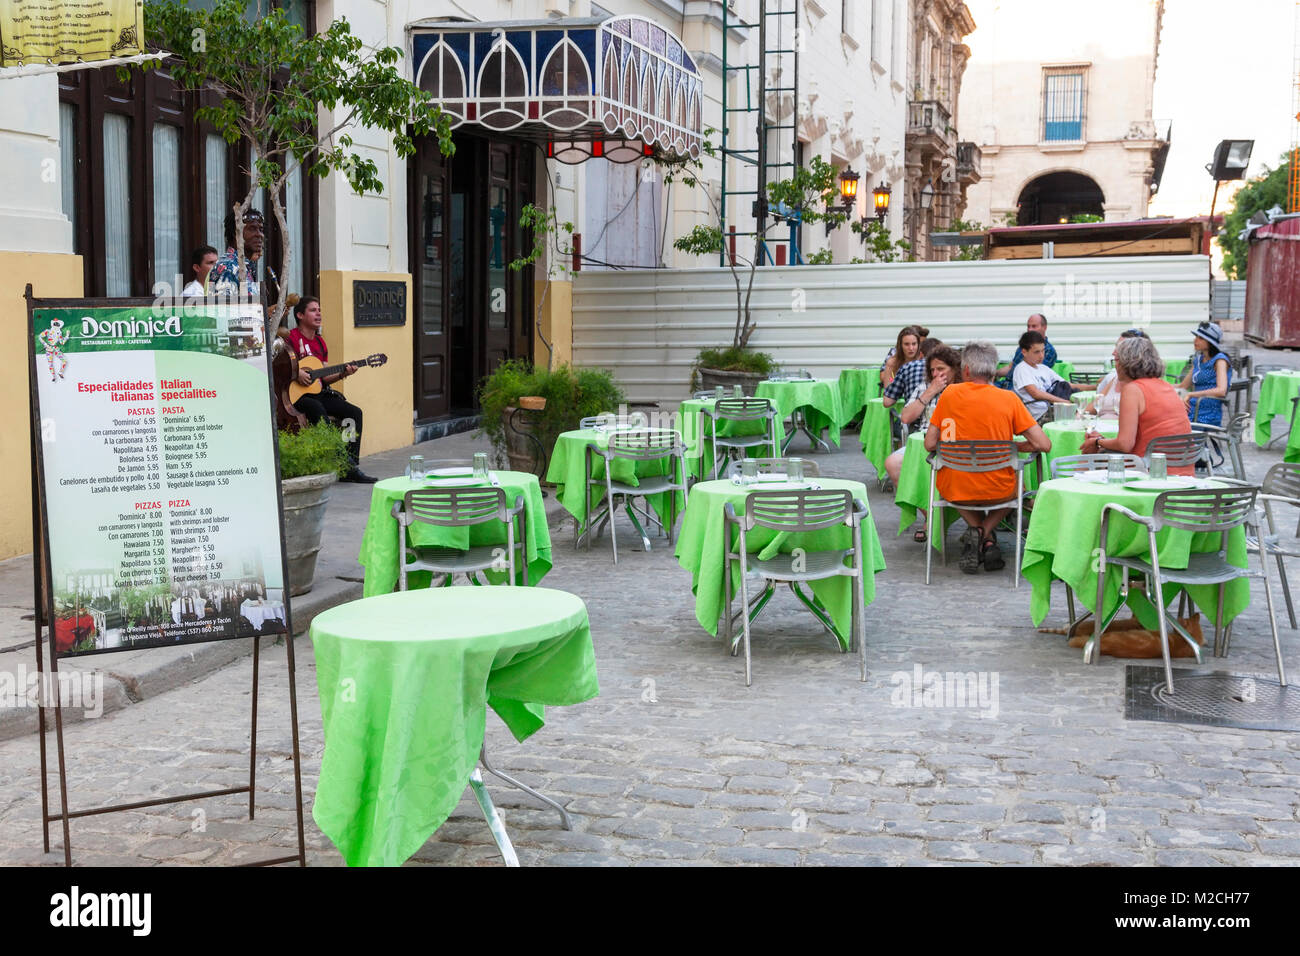 The patio at La Dominica Restaurant in Havana, Cuba. Stock Photo